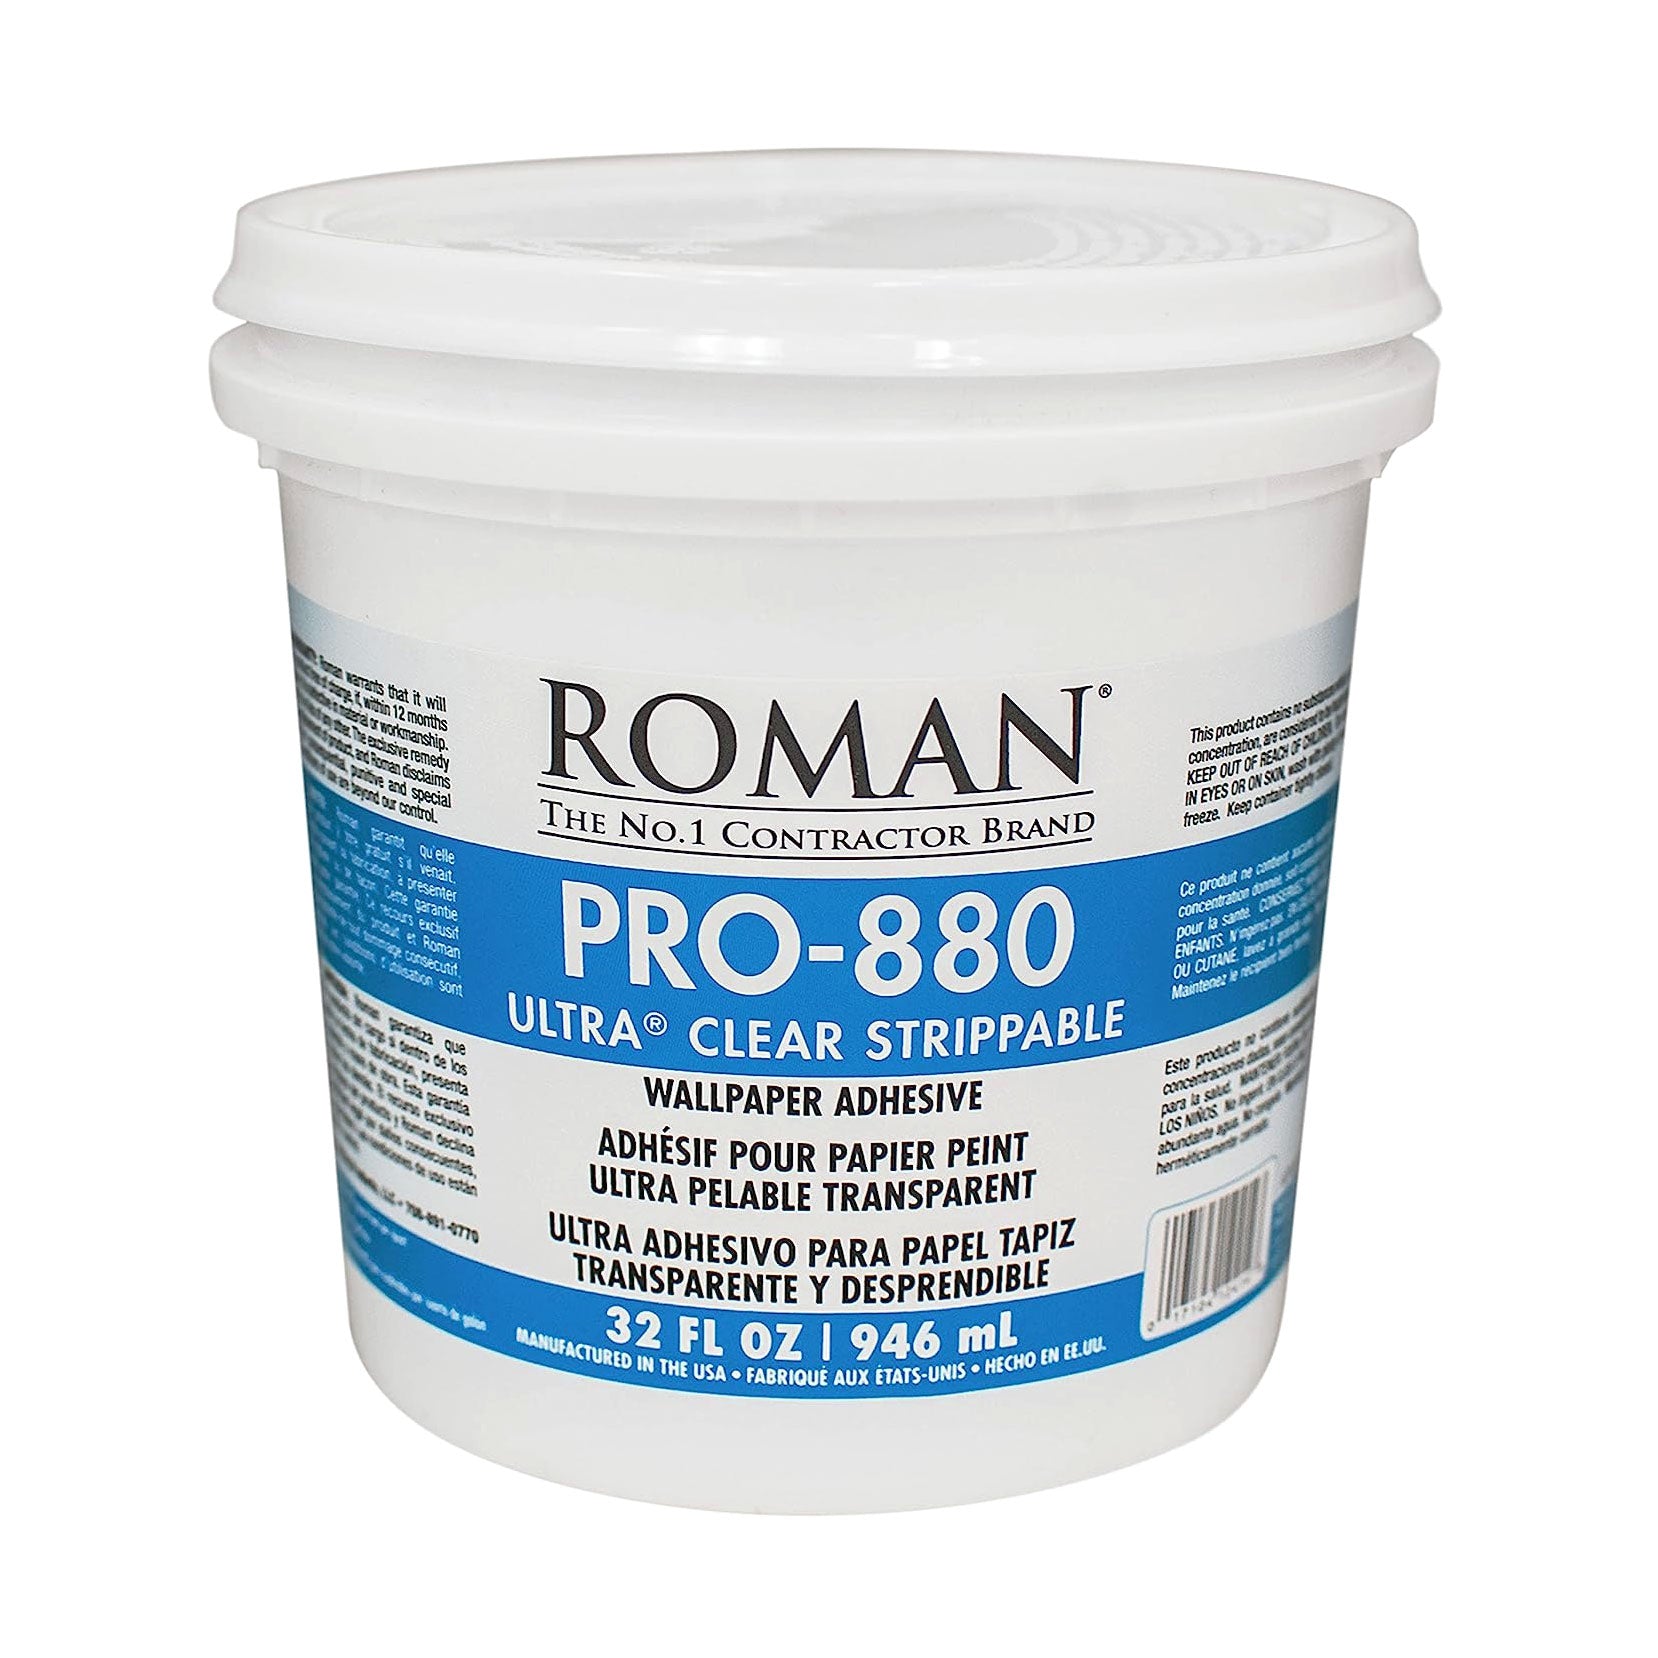 Roman PRO-543 32-oz Liquid Wallpaper Adhesive in the Wallpaper Paste  department at